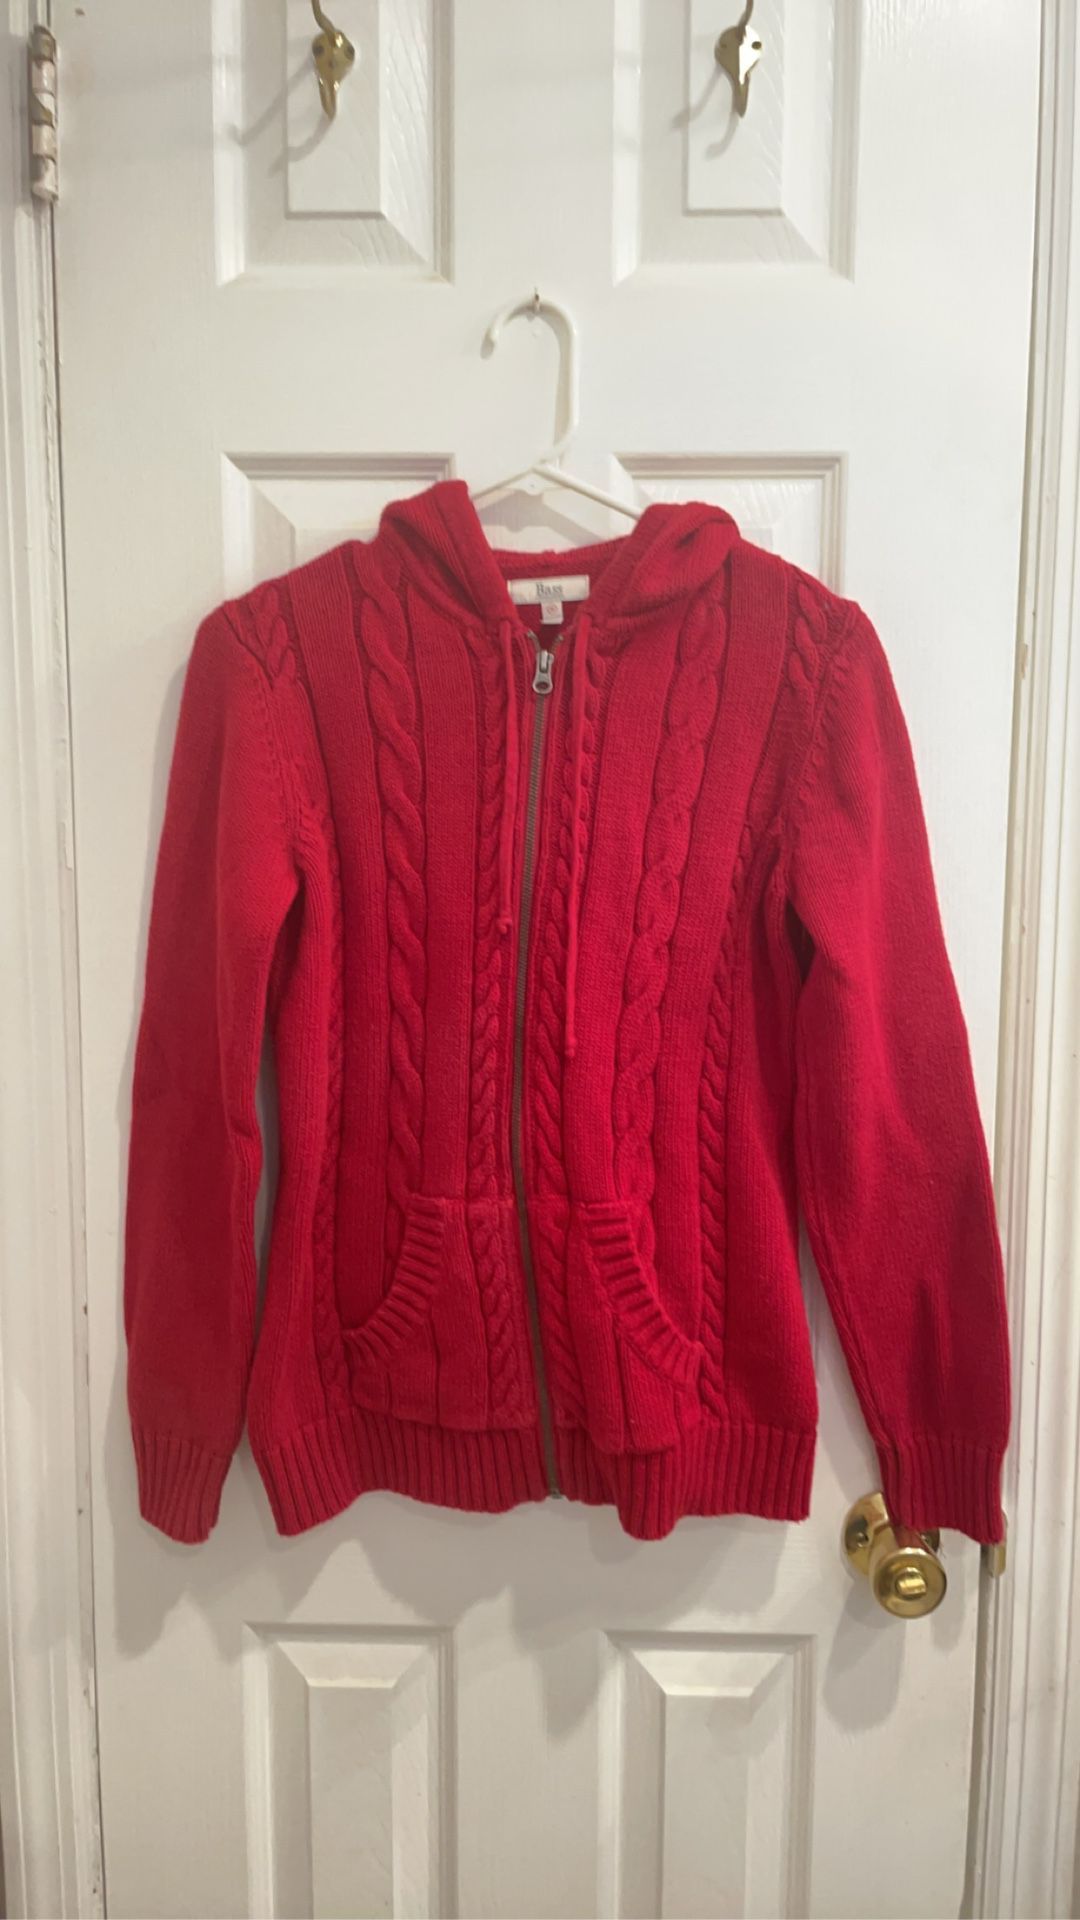 NWOT! Bass red cotton knit zip up hoodie- size medium